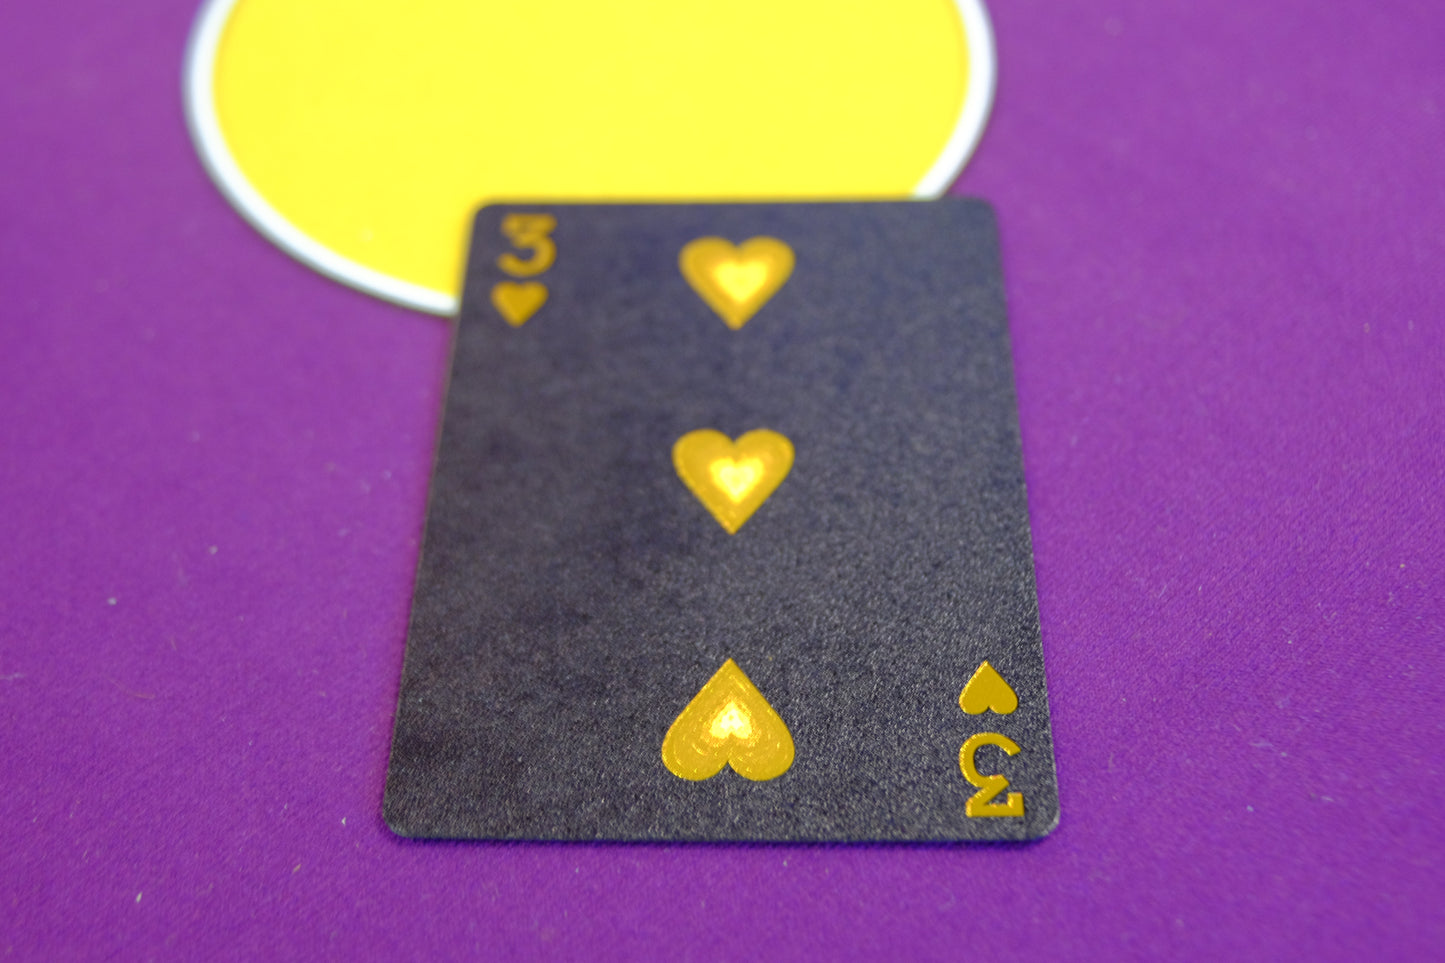 24k Gold Foil & Black Cross Skulls Playing Cards